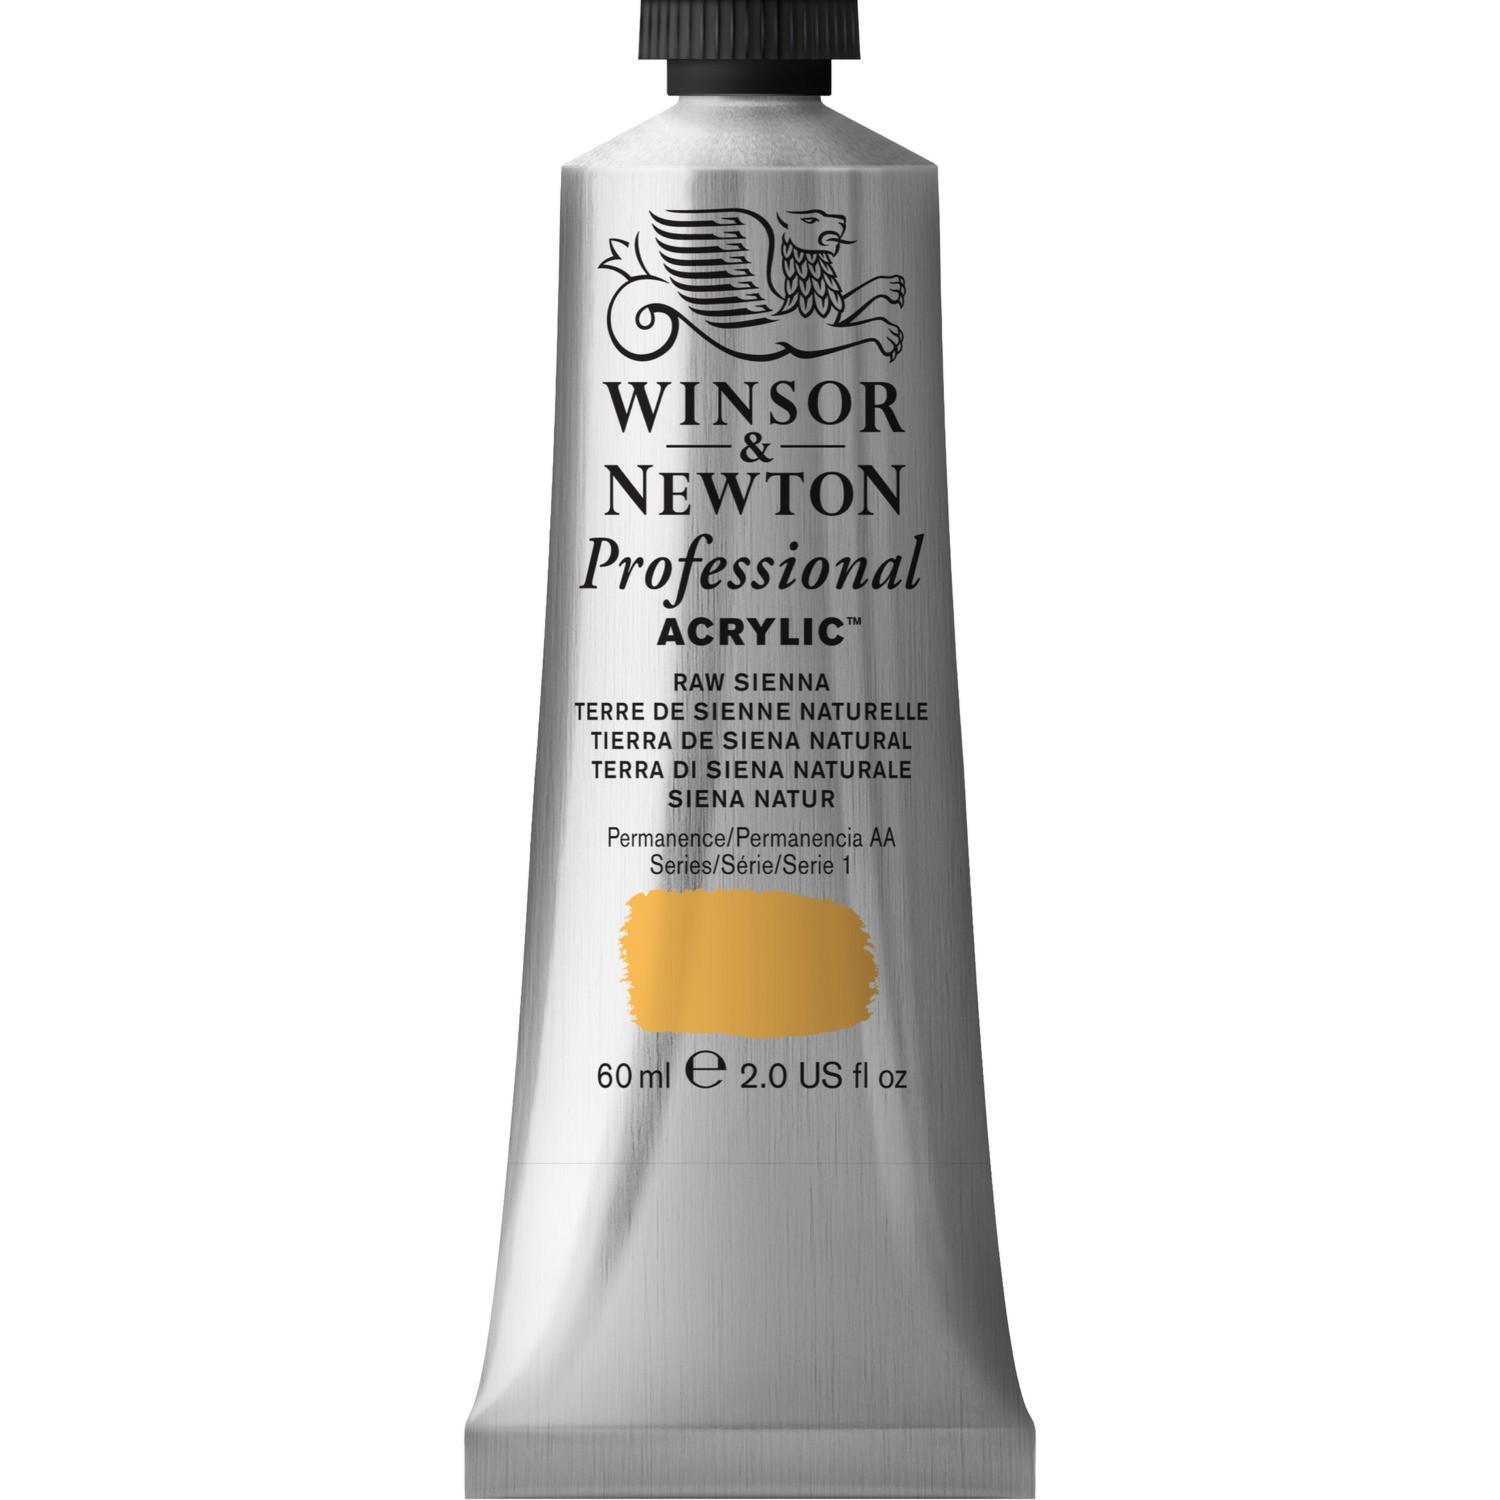 Winsor and Newton 60ml Professional Acrylic Paint - Raw Sienna Image 1